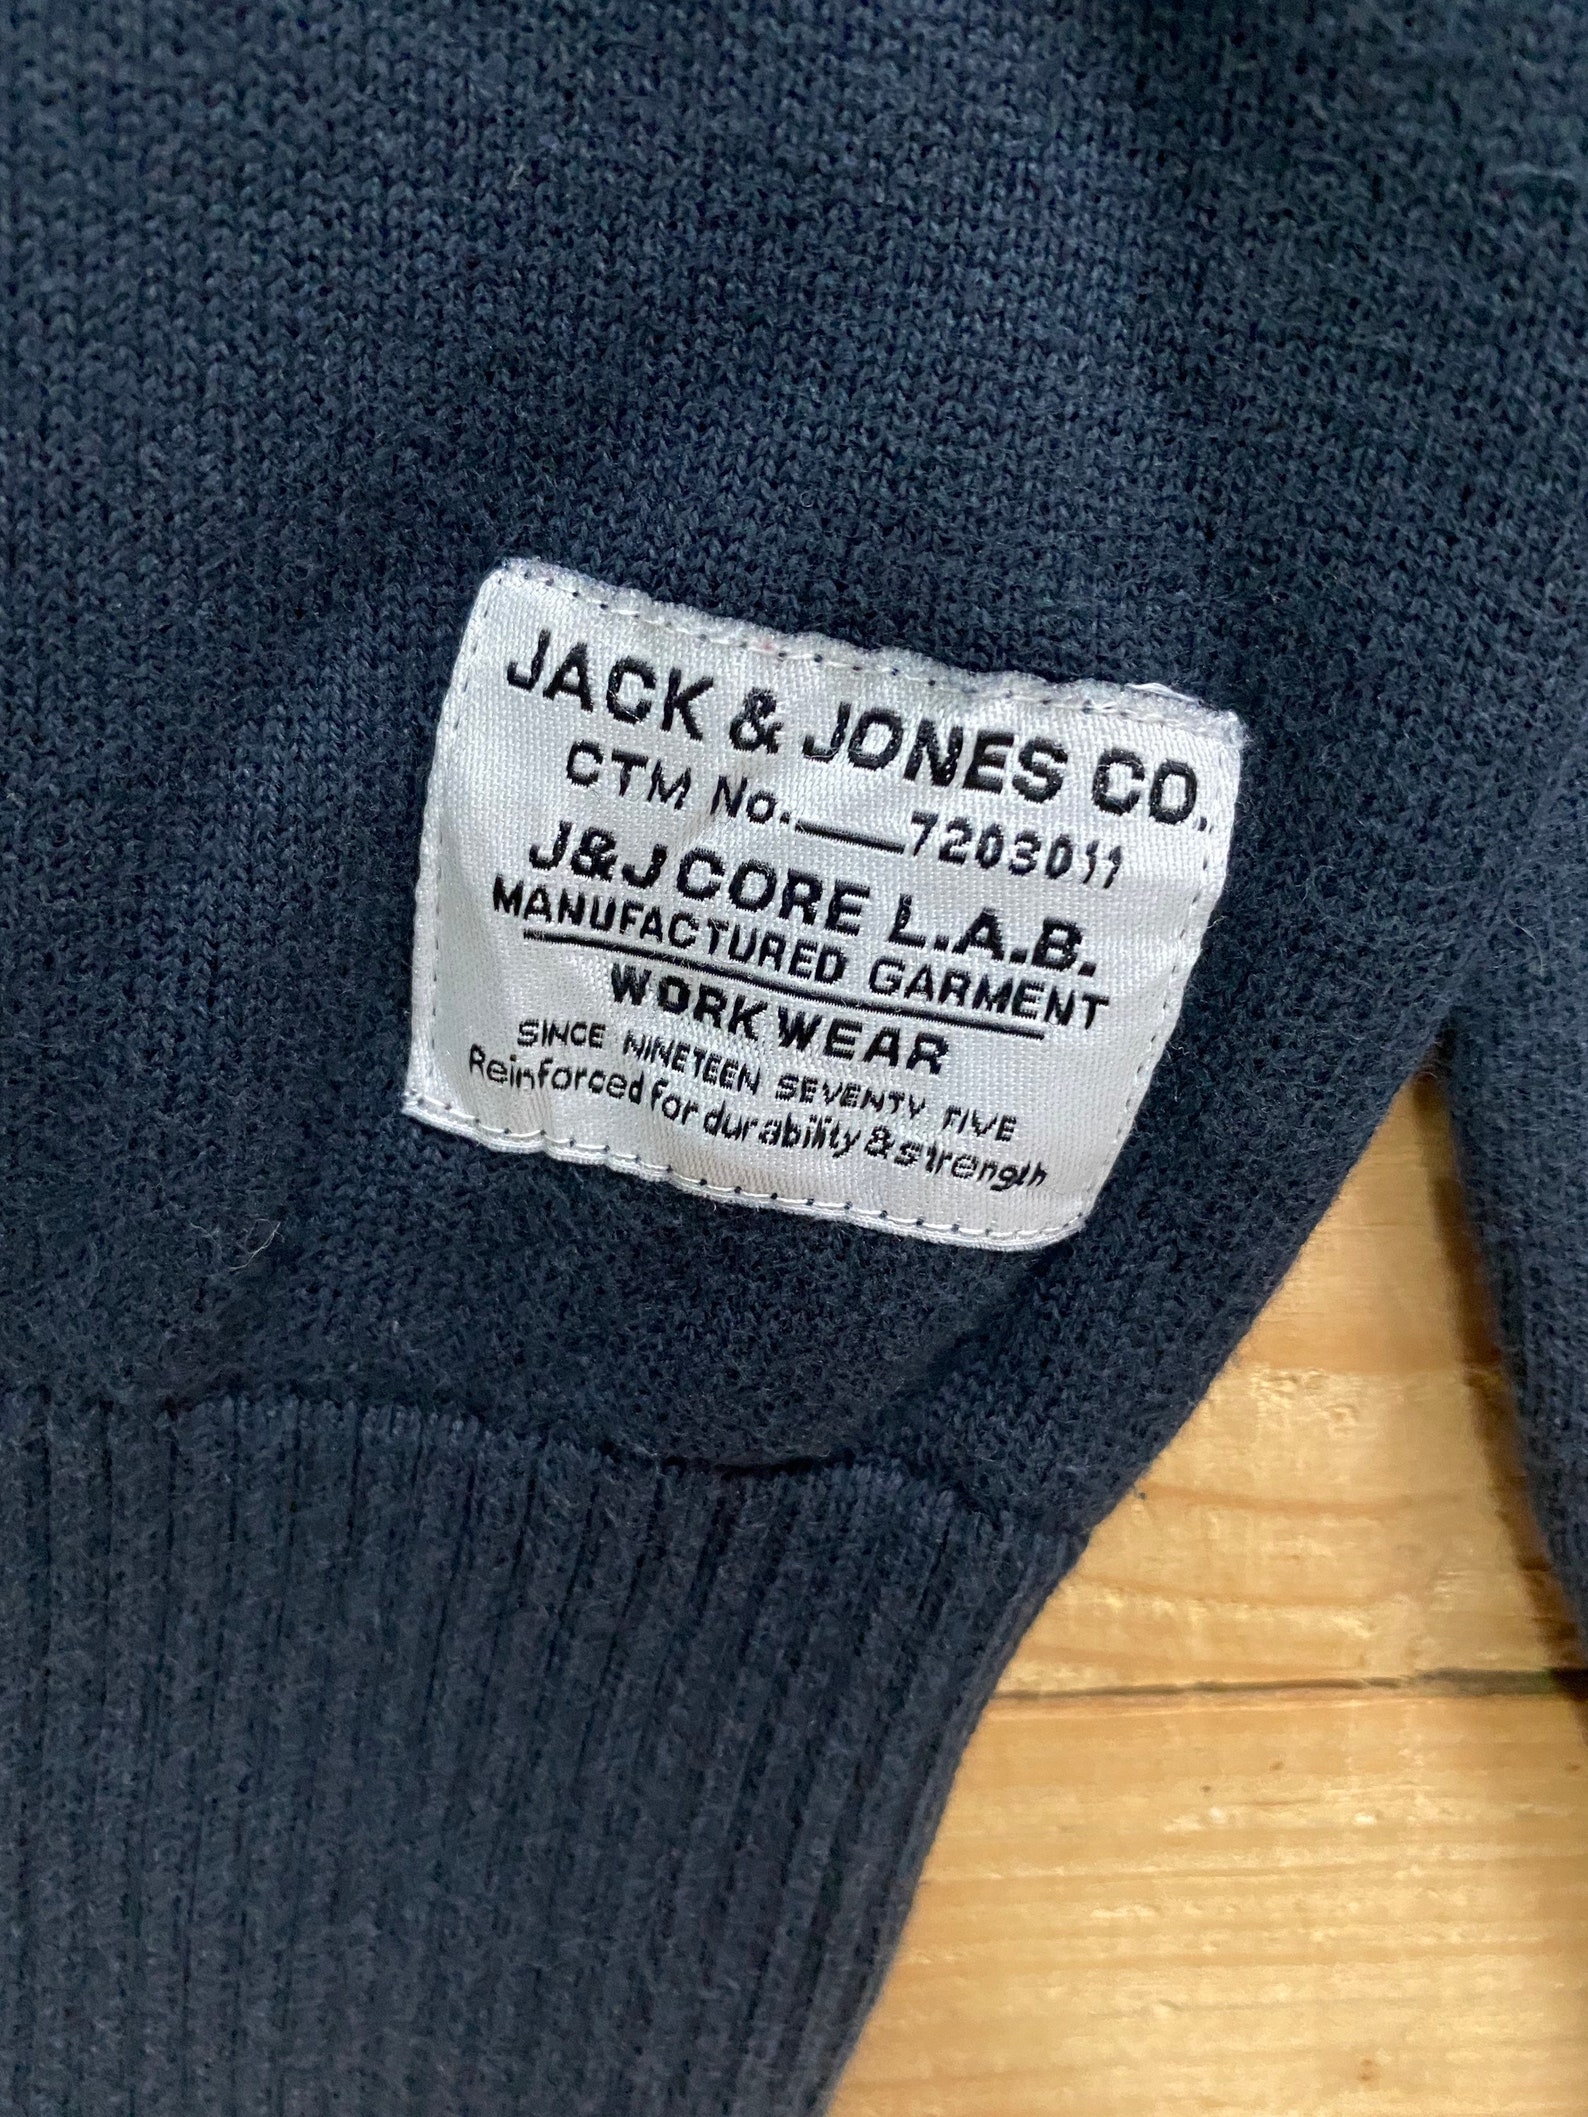 Vintage JACK & JONES: core workwear LAB spellout crewneck | Etsy